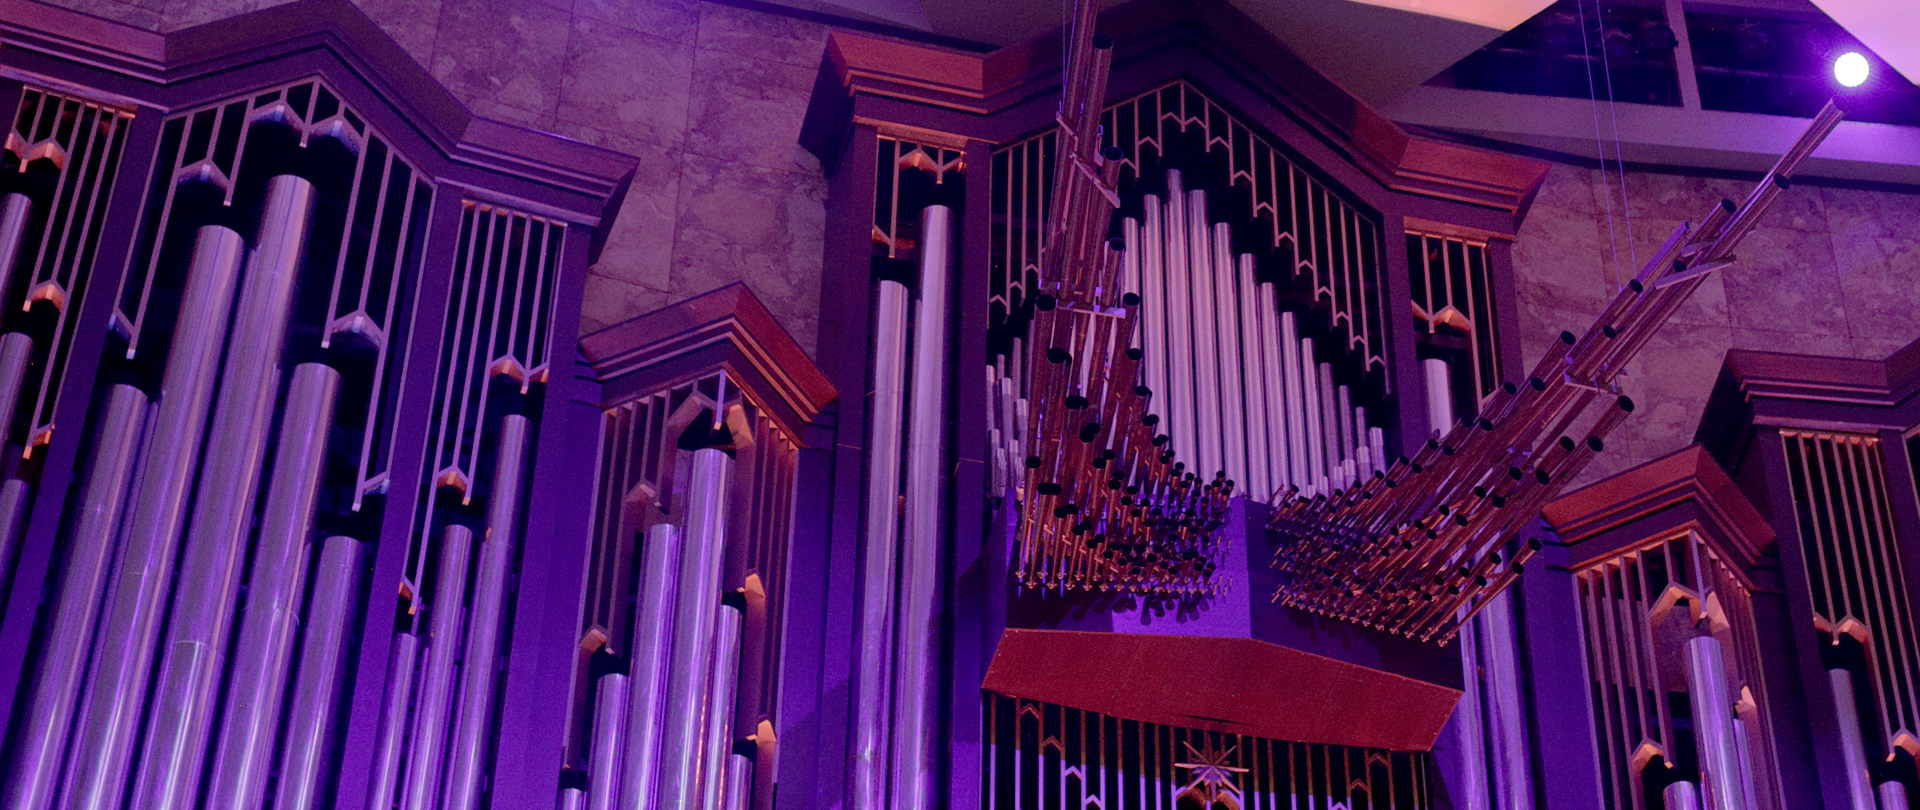 Organ Concerts
Selected Thursdays
Join us January 27 at 10:00 AM
